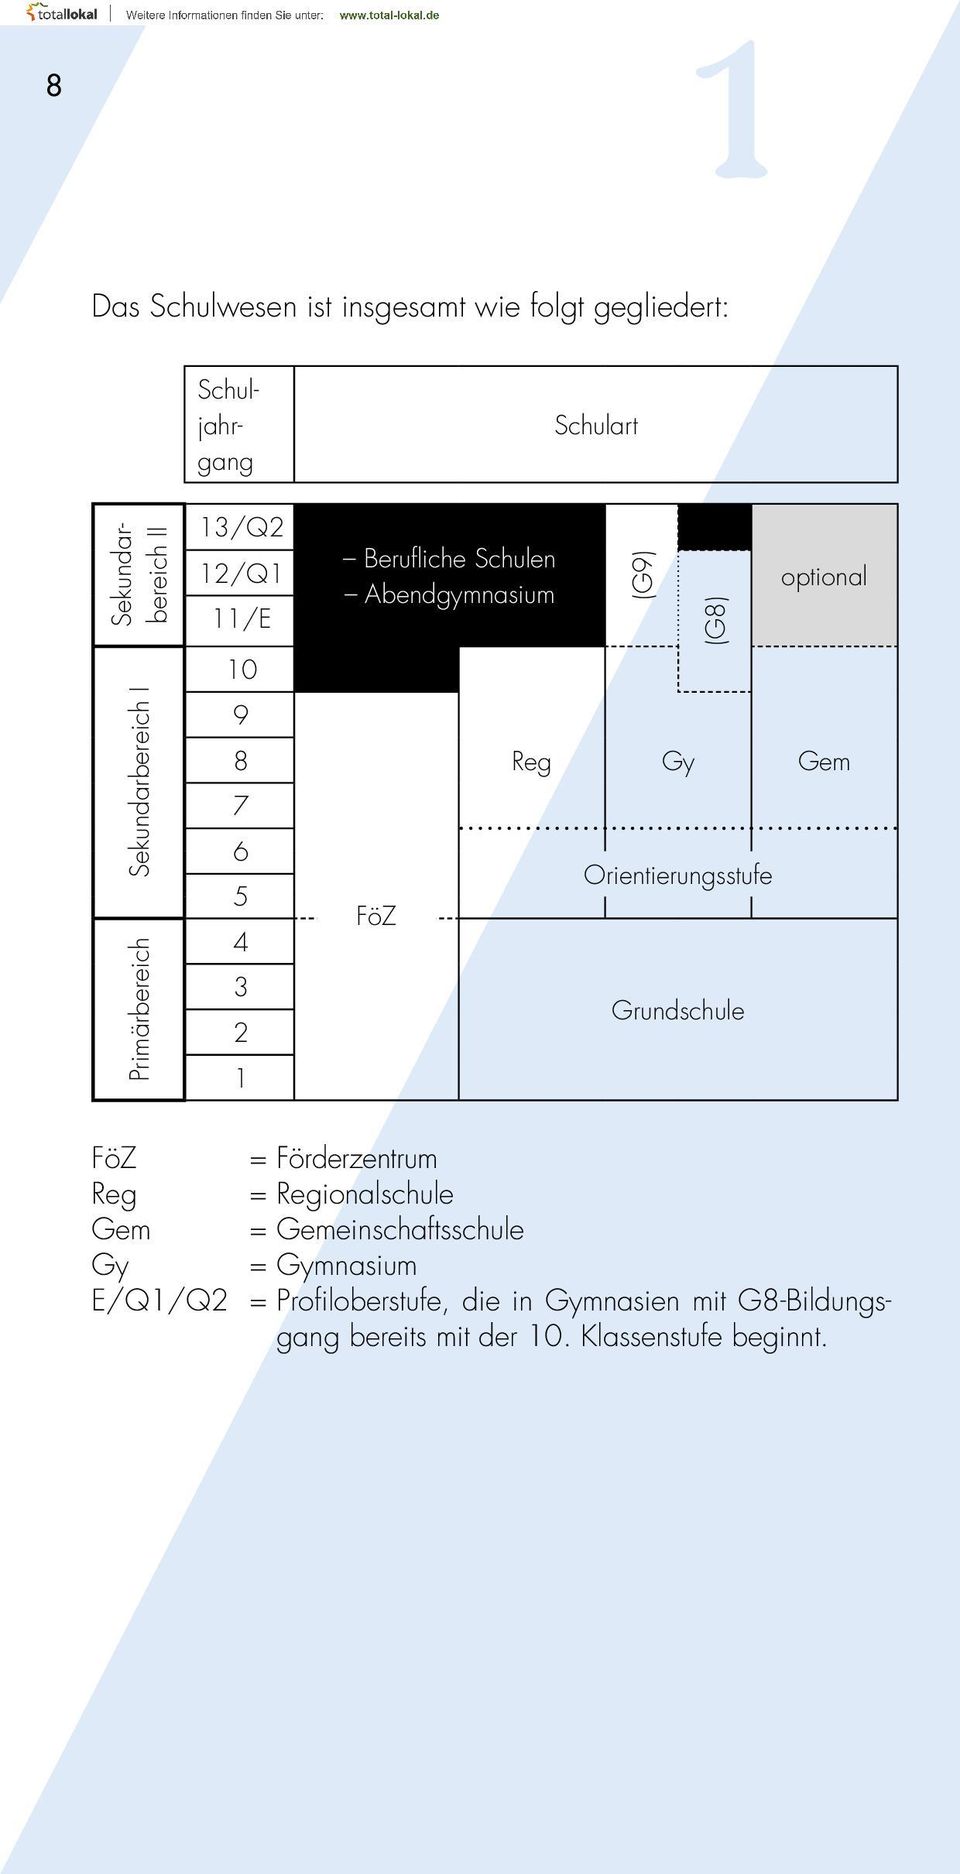 Reg Gy Gem Orientierungsstufe Grundschule FöZ = Förderzentrum Reg = Regionalschule Gem = Gemeinschaftsschule Gy =